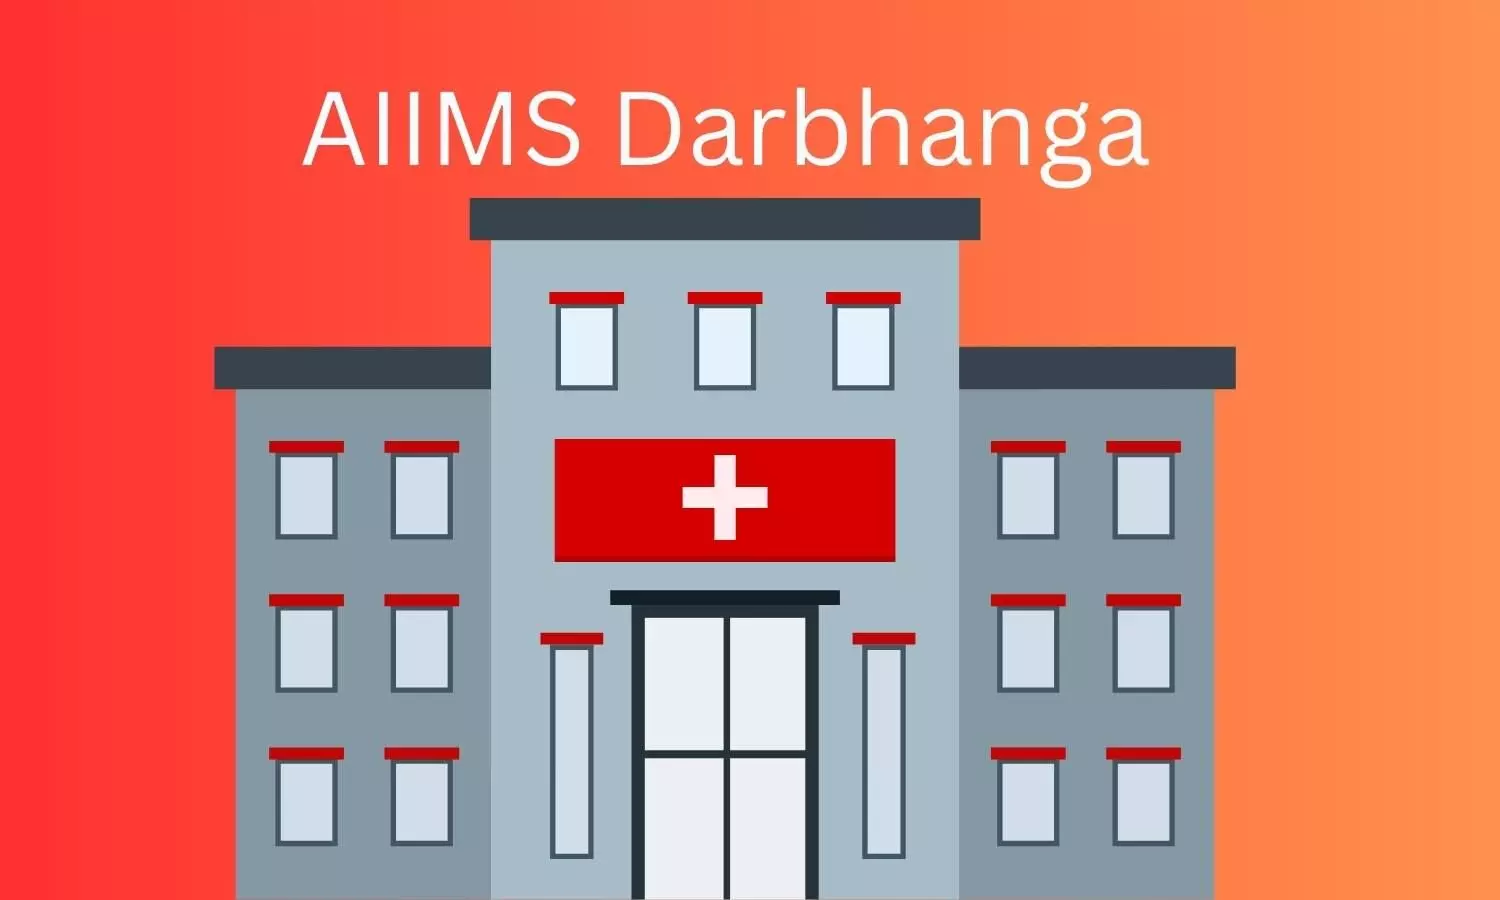 AIIMS Darbhanga Campus Gets Central Approval, says Bihar CM Nitish Kumar